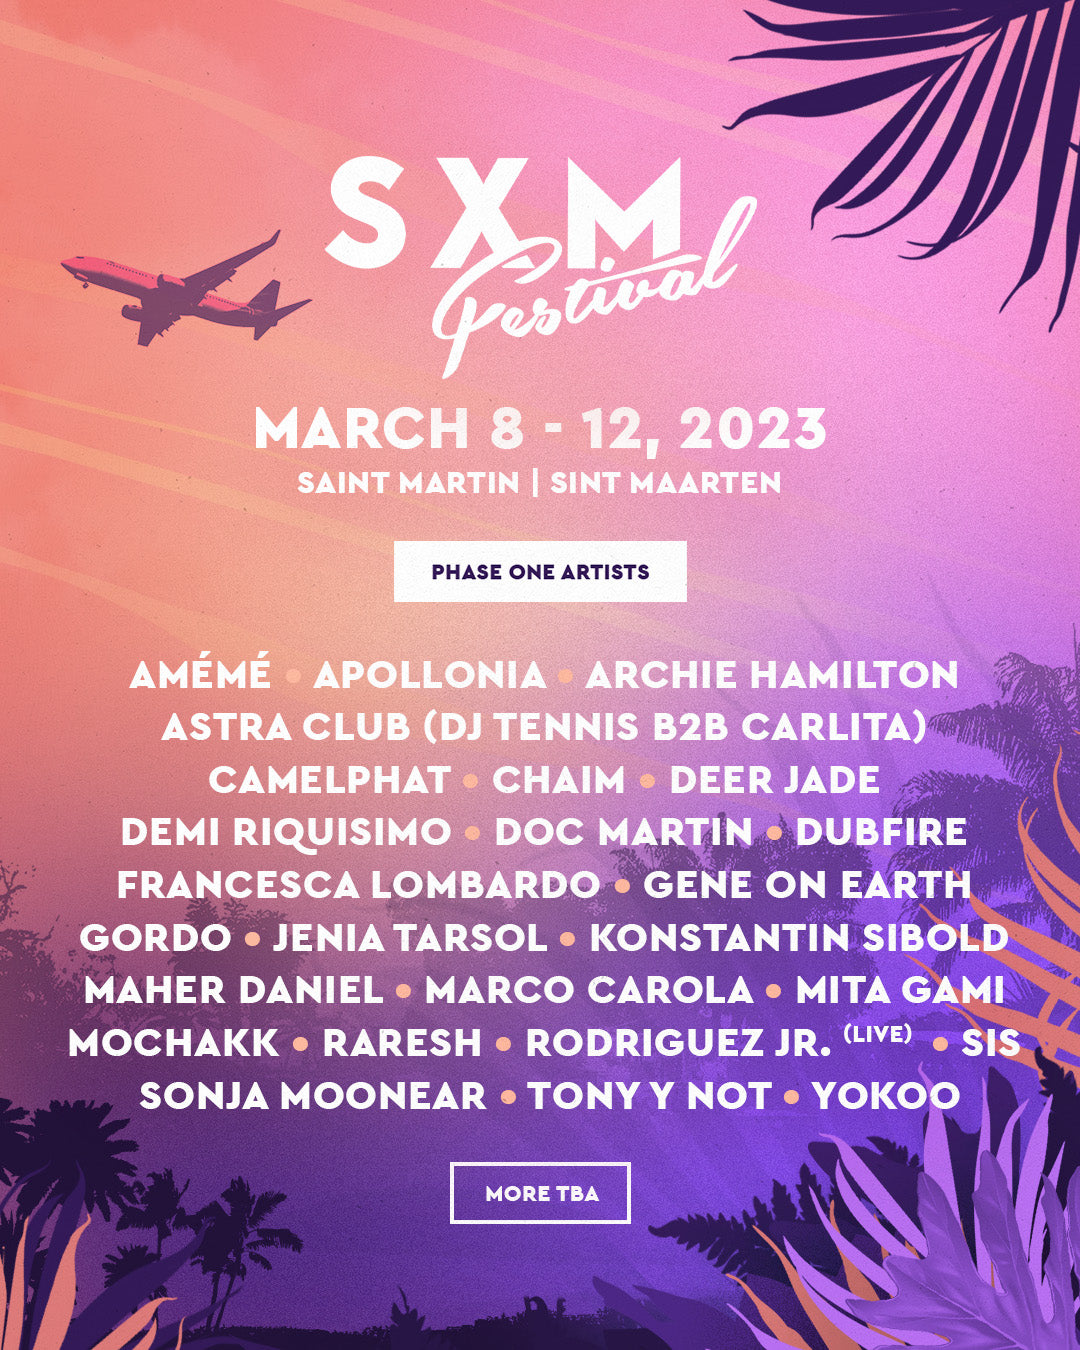 SXM Festival announces CamelPhat, Dubfire, Gordo, Marco Carola, Francesca Lombardo, Astra Club (DJ Tennis B2B Carlita), Mochakk + more for 2023 lineup